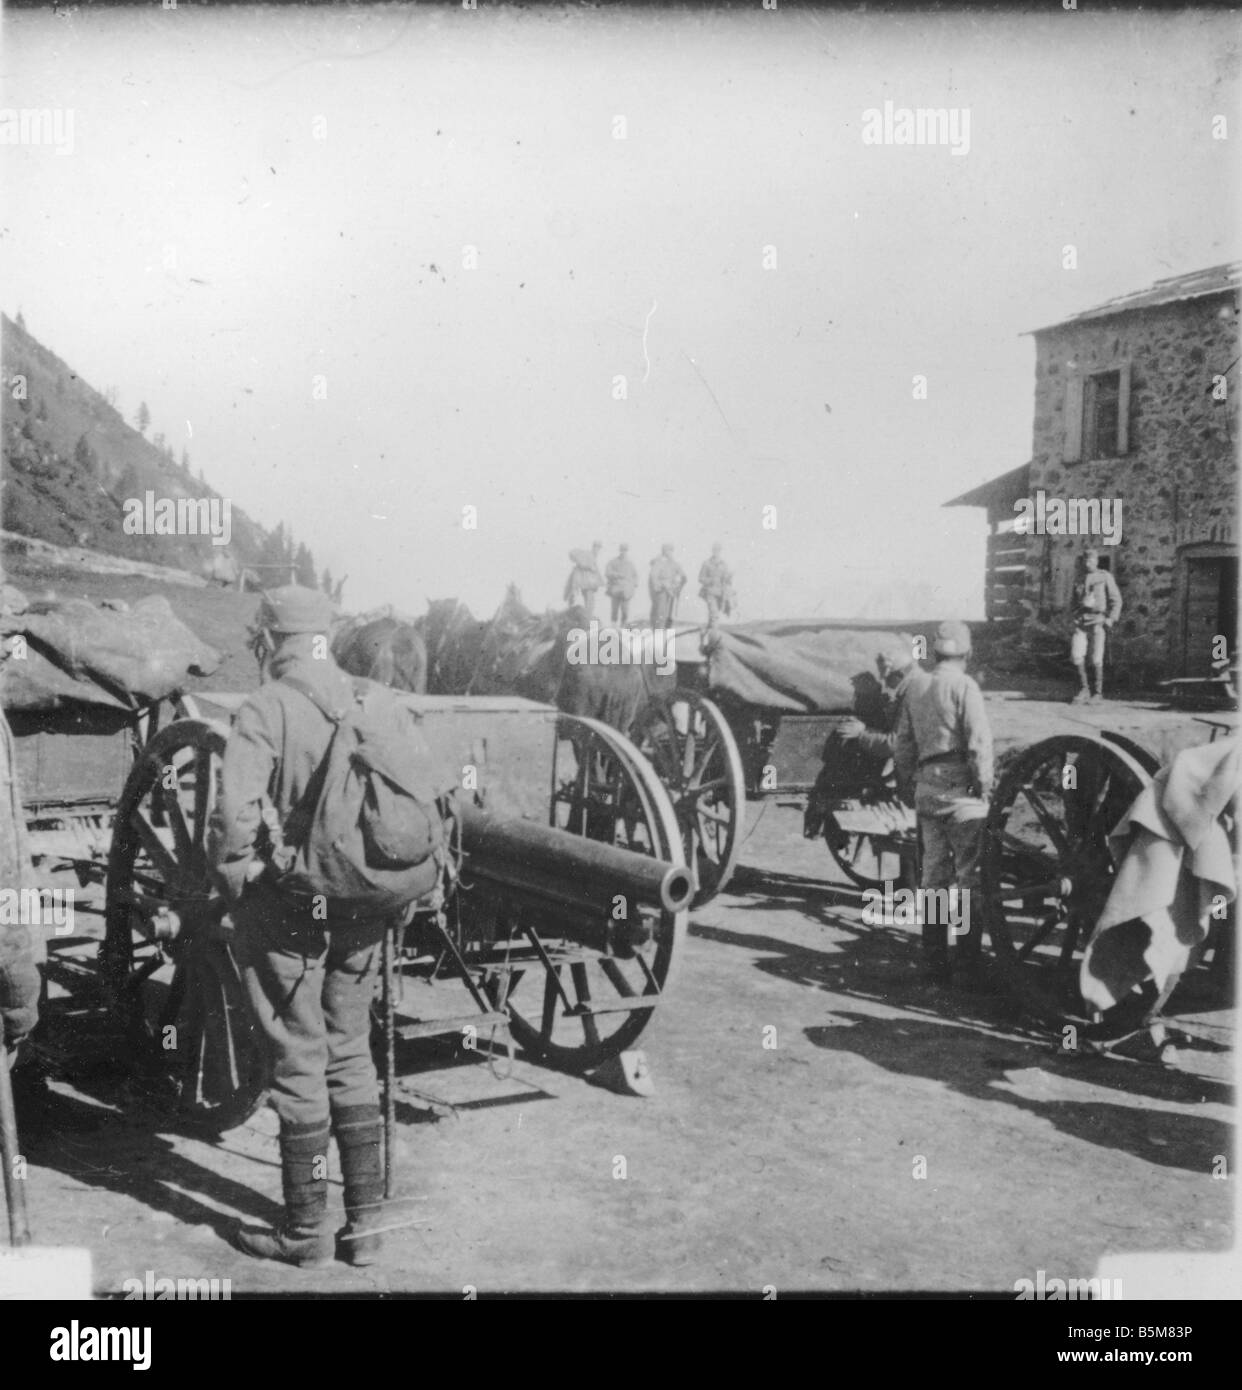 2 G55 A1 1915 7 Primera Guerra Mundial Historia de artillería de campo austríaco de la I Guerra Mundial de artillería de campo austriaco foto sin fecha ni ubicación parte Foto de stock